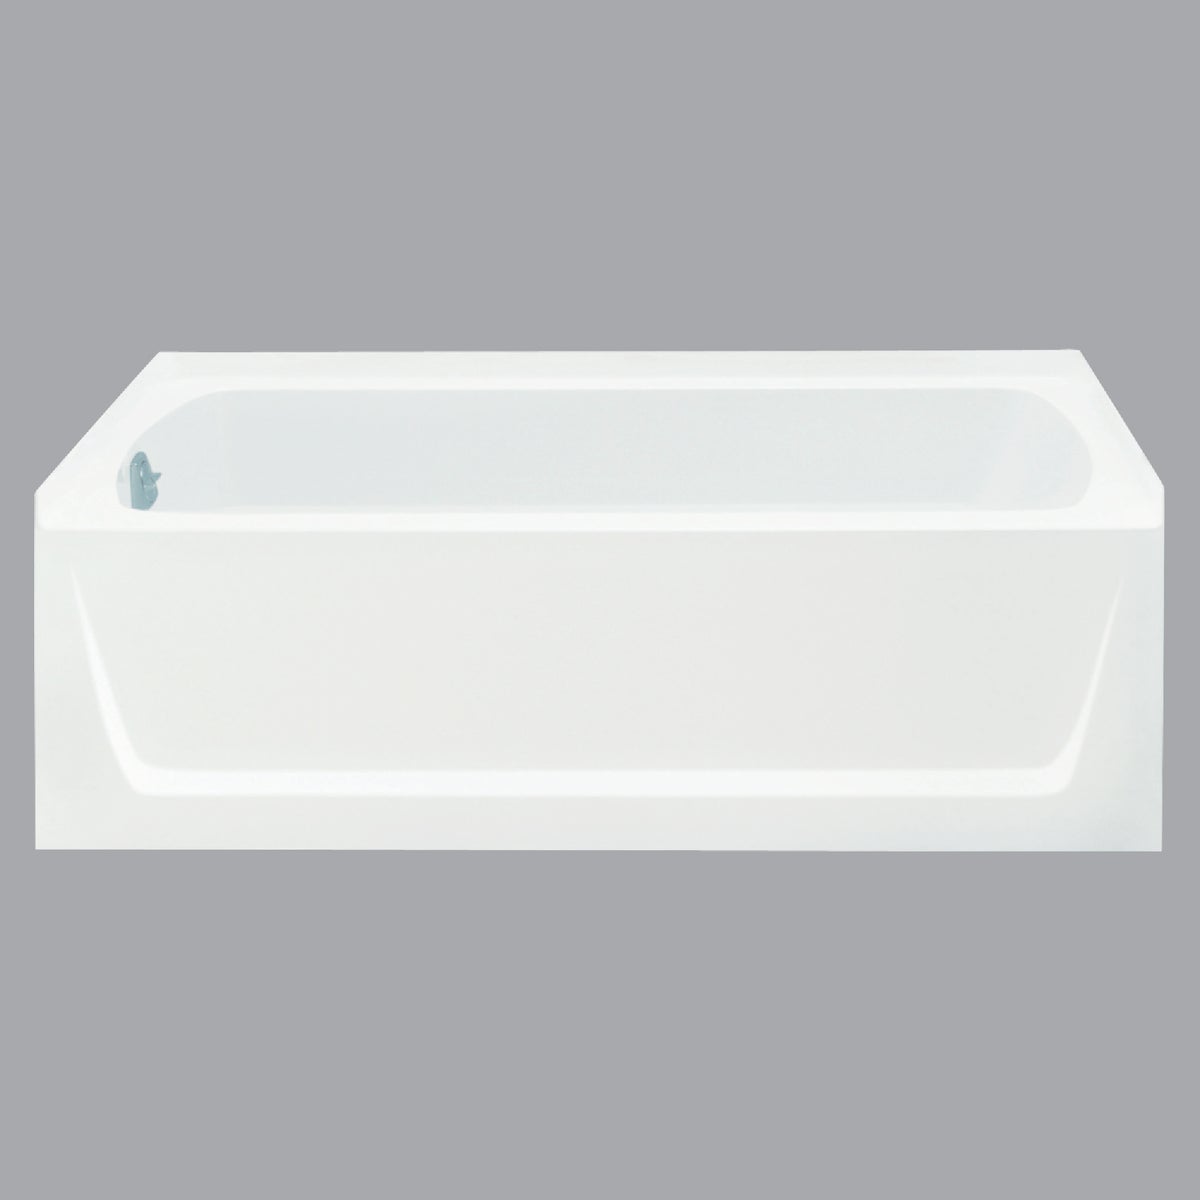 Item 443345, Delivering a sleek, ergonomic design, the Ensemble bath by Sterling 